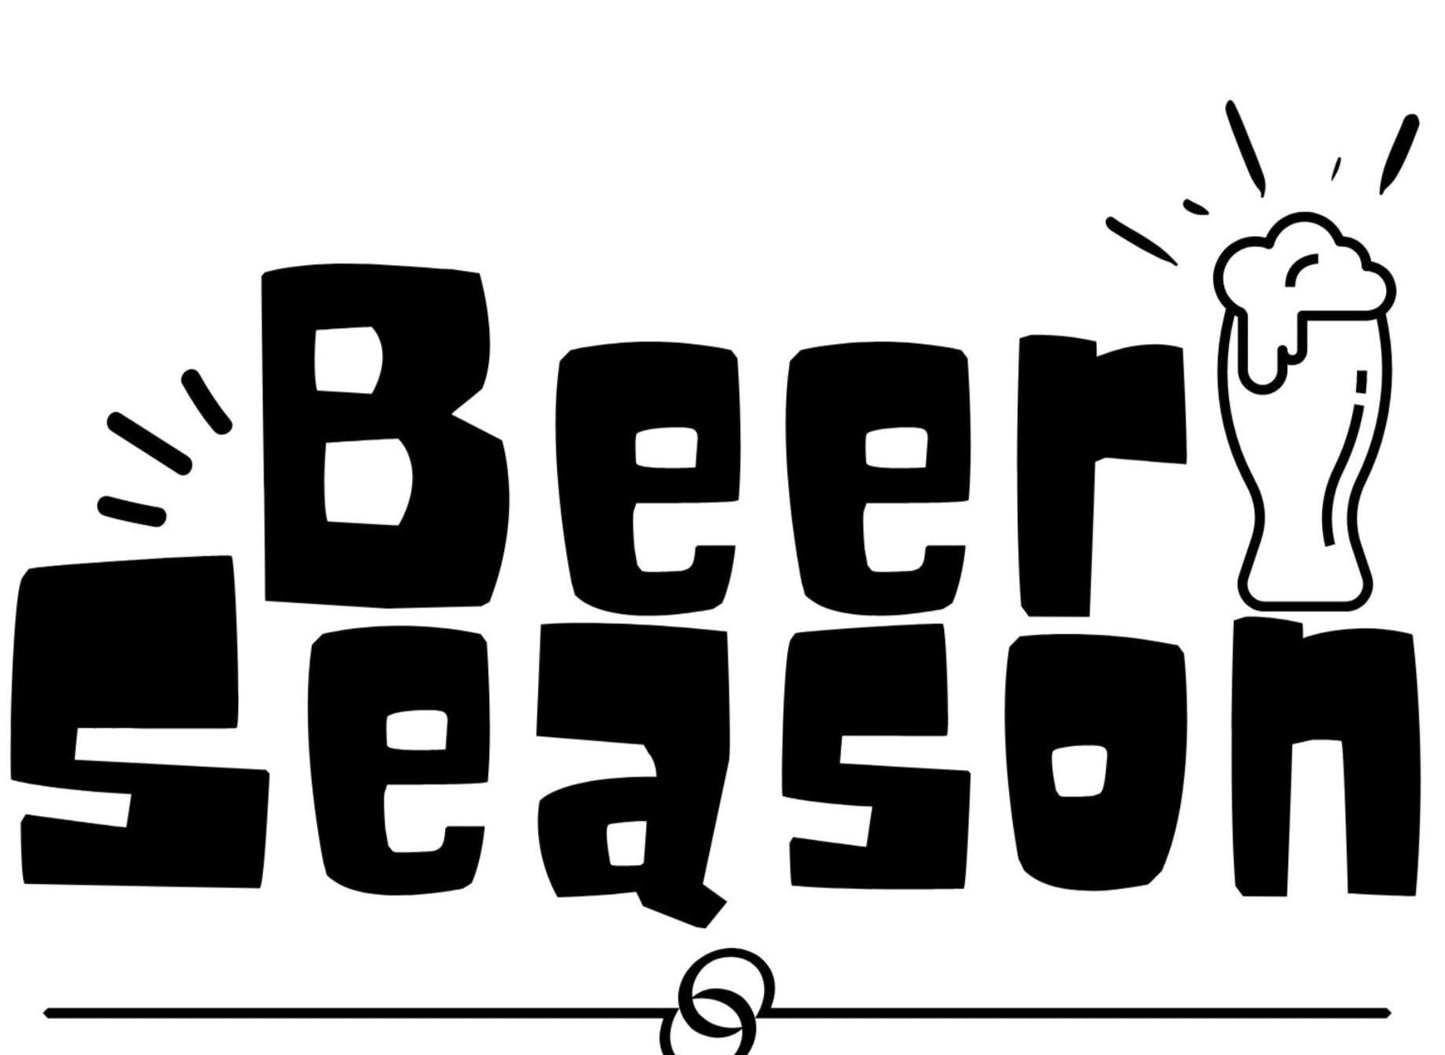 Beer Season v3